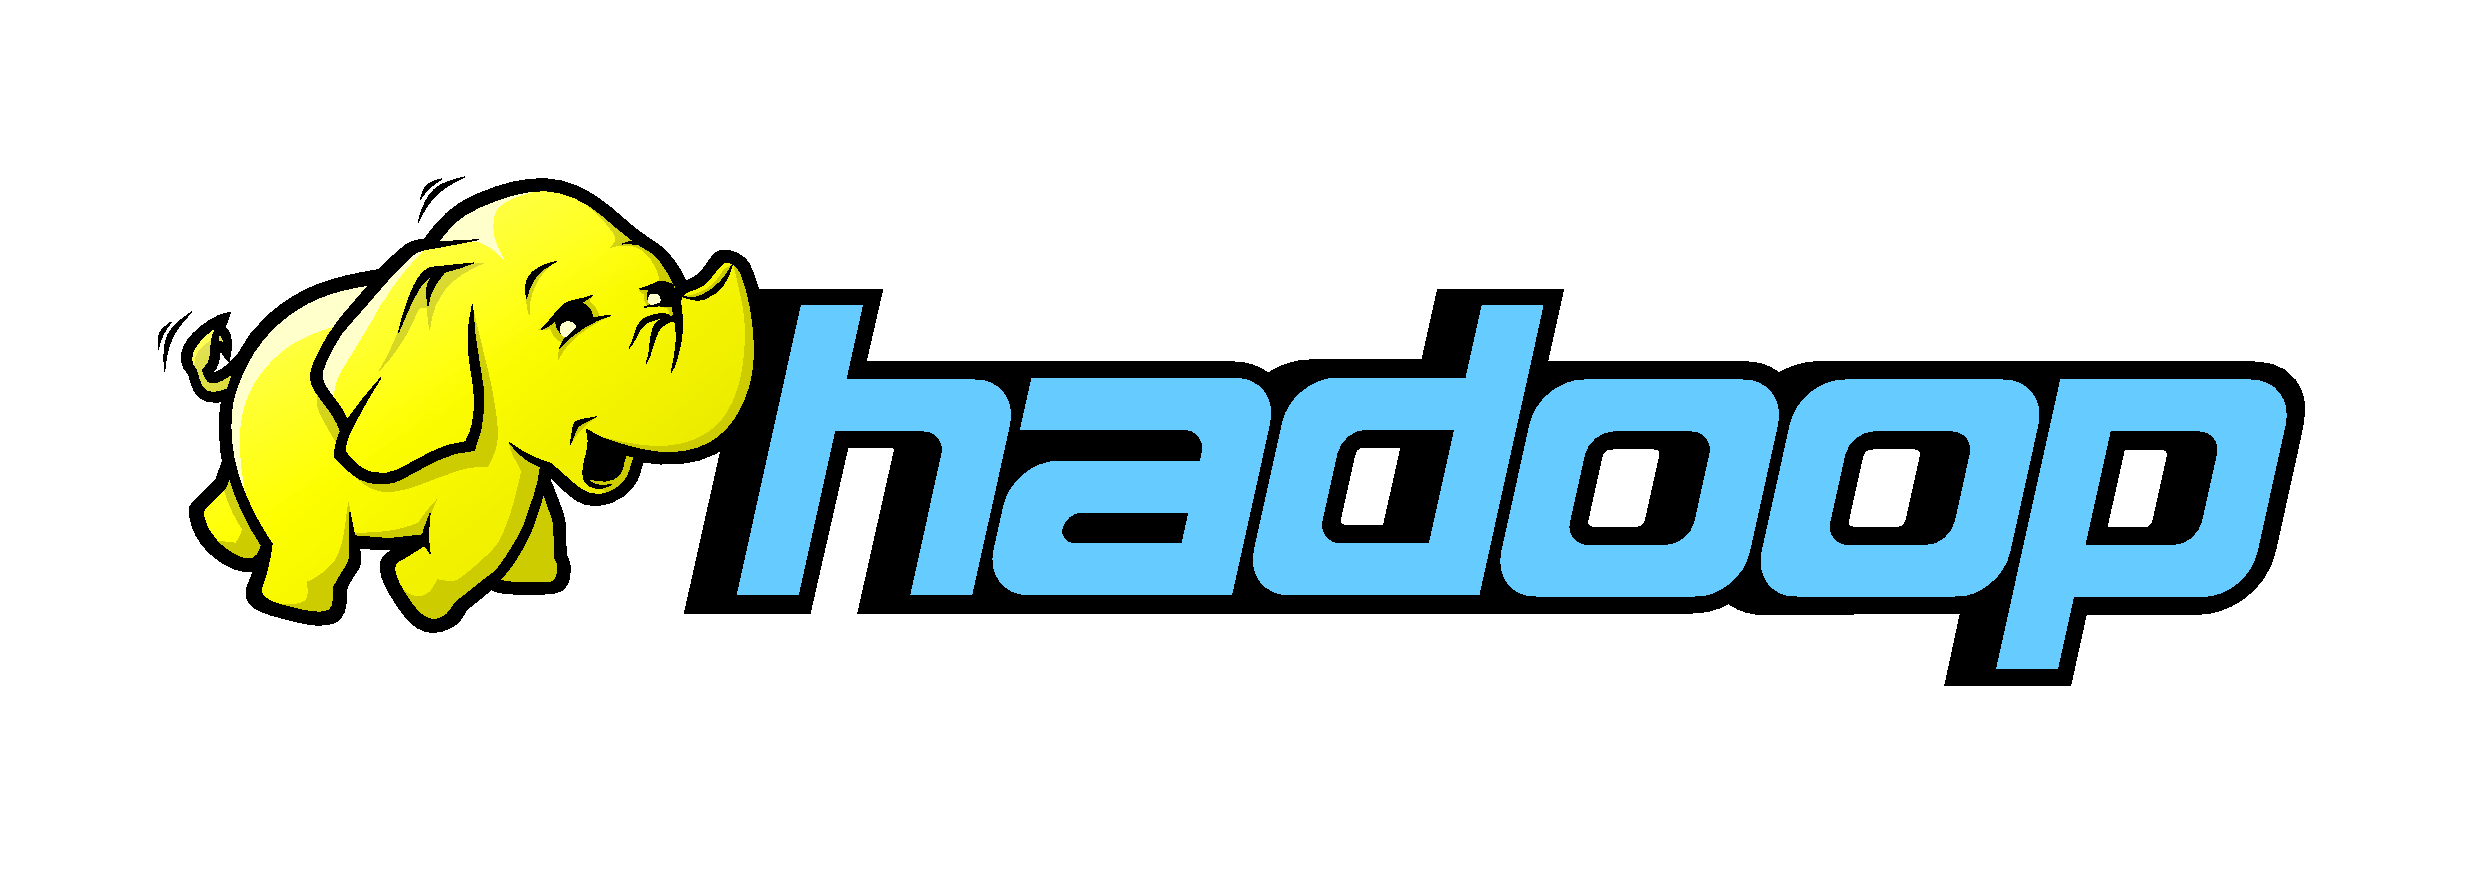 HDFS Logo - How To Setup Apache Hadoop On CentOS | Unixmen